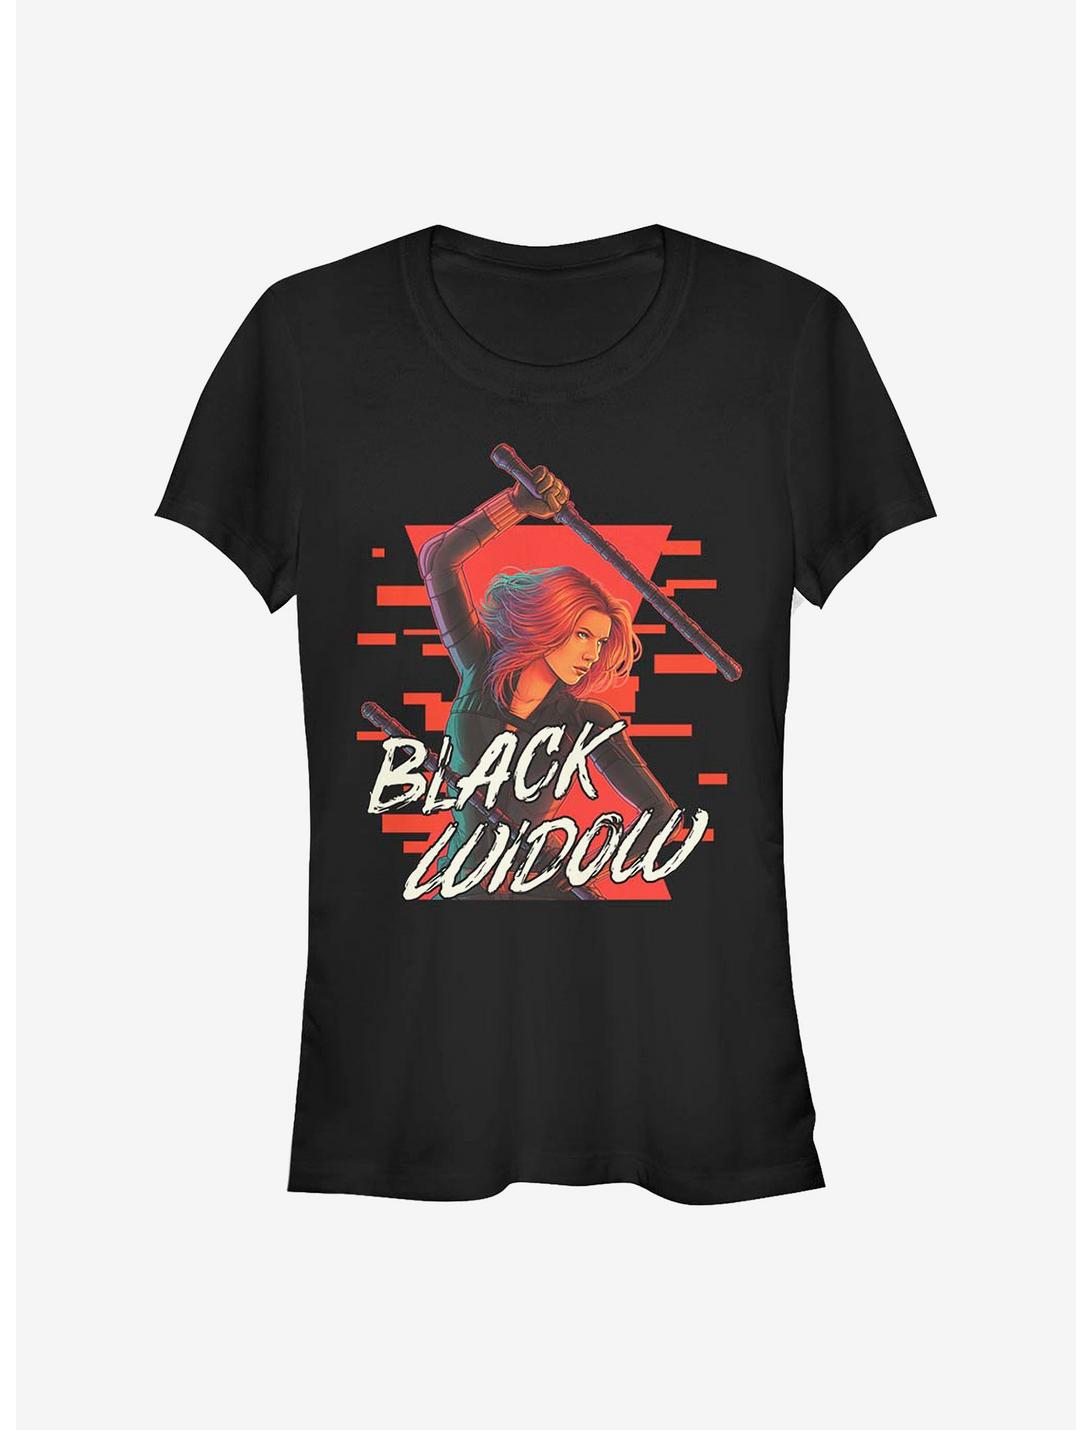 Marvel Black Widow Graphic Black Widow Girls T-Shirt, BLACK, hi-res